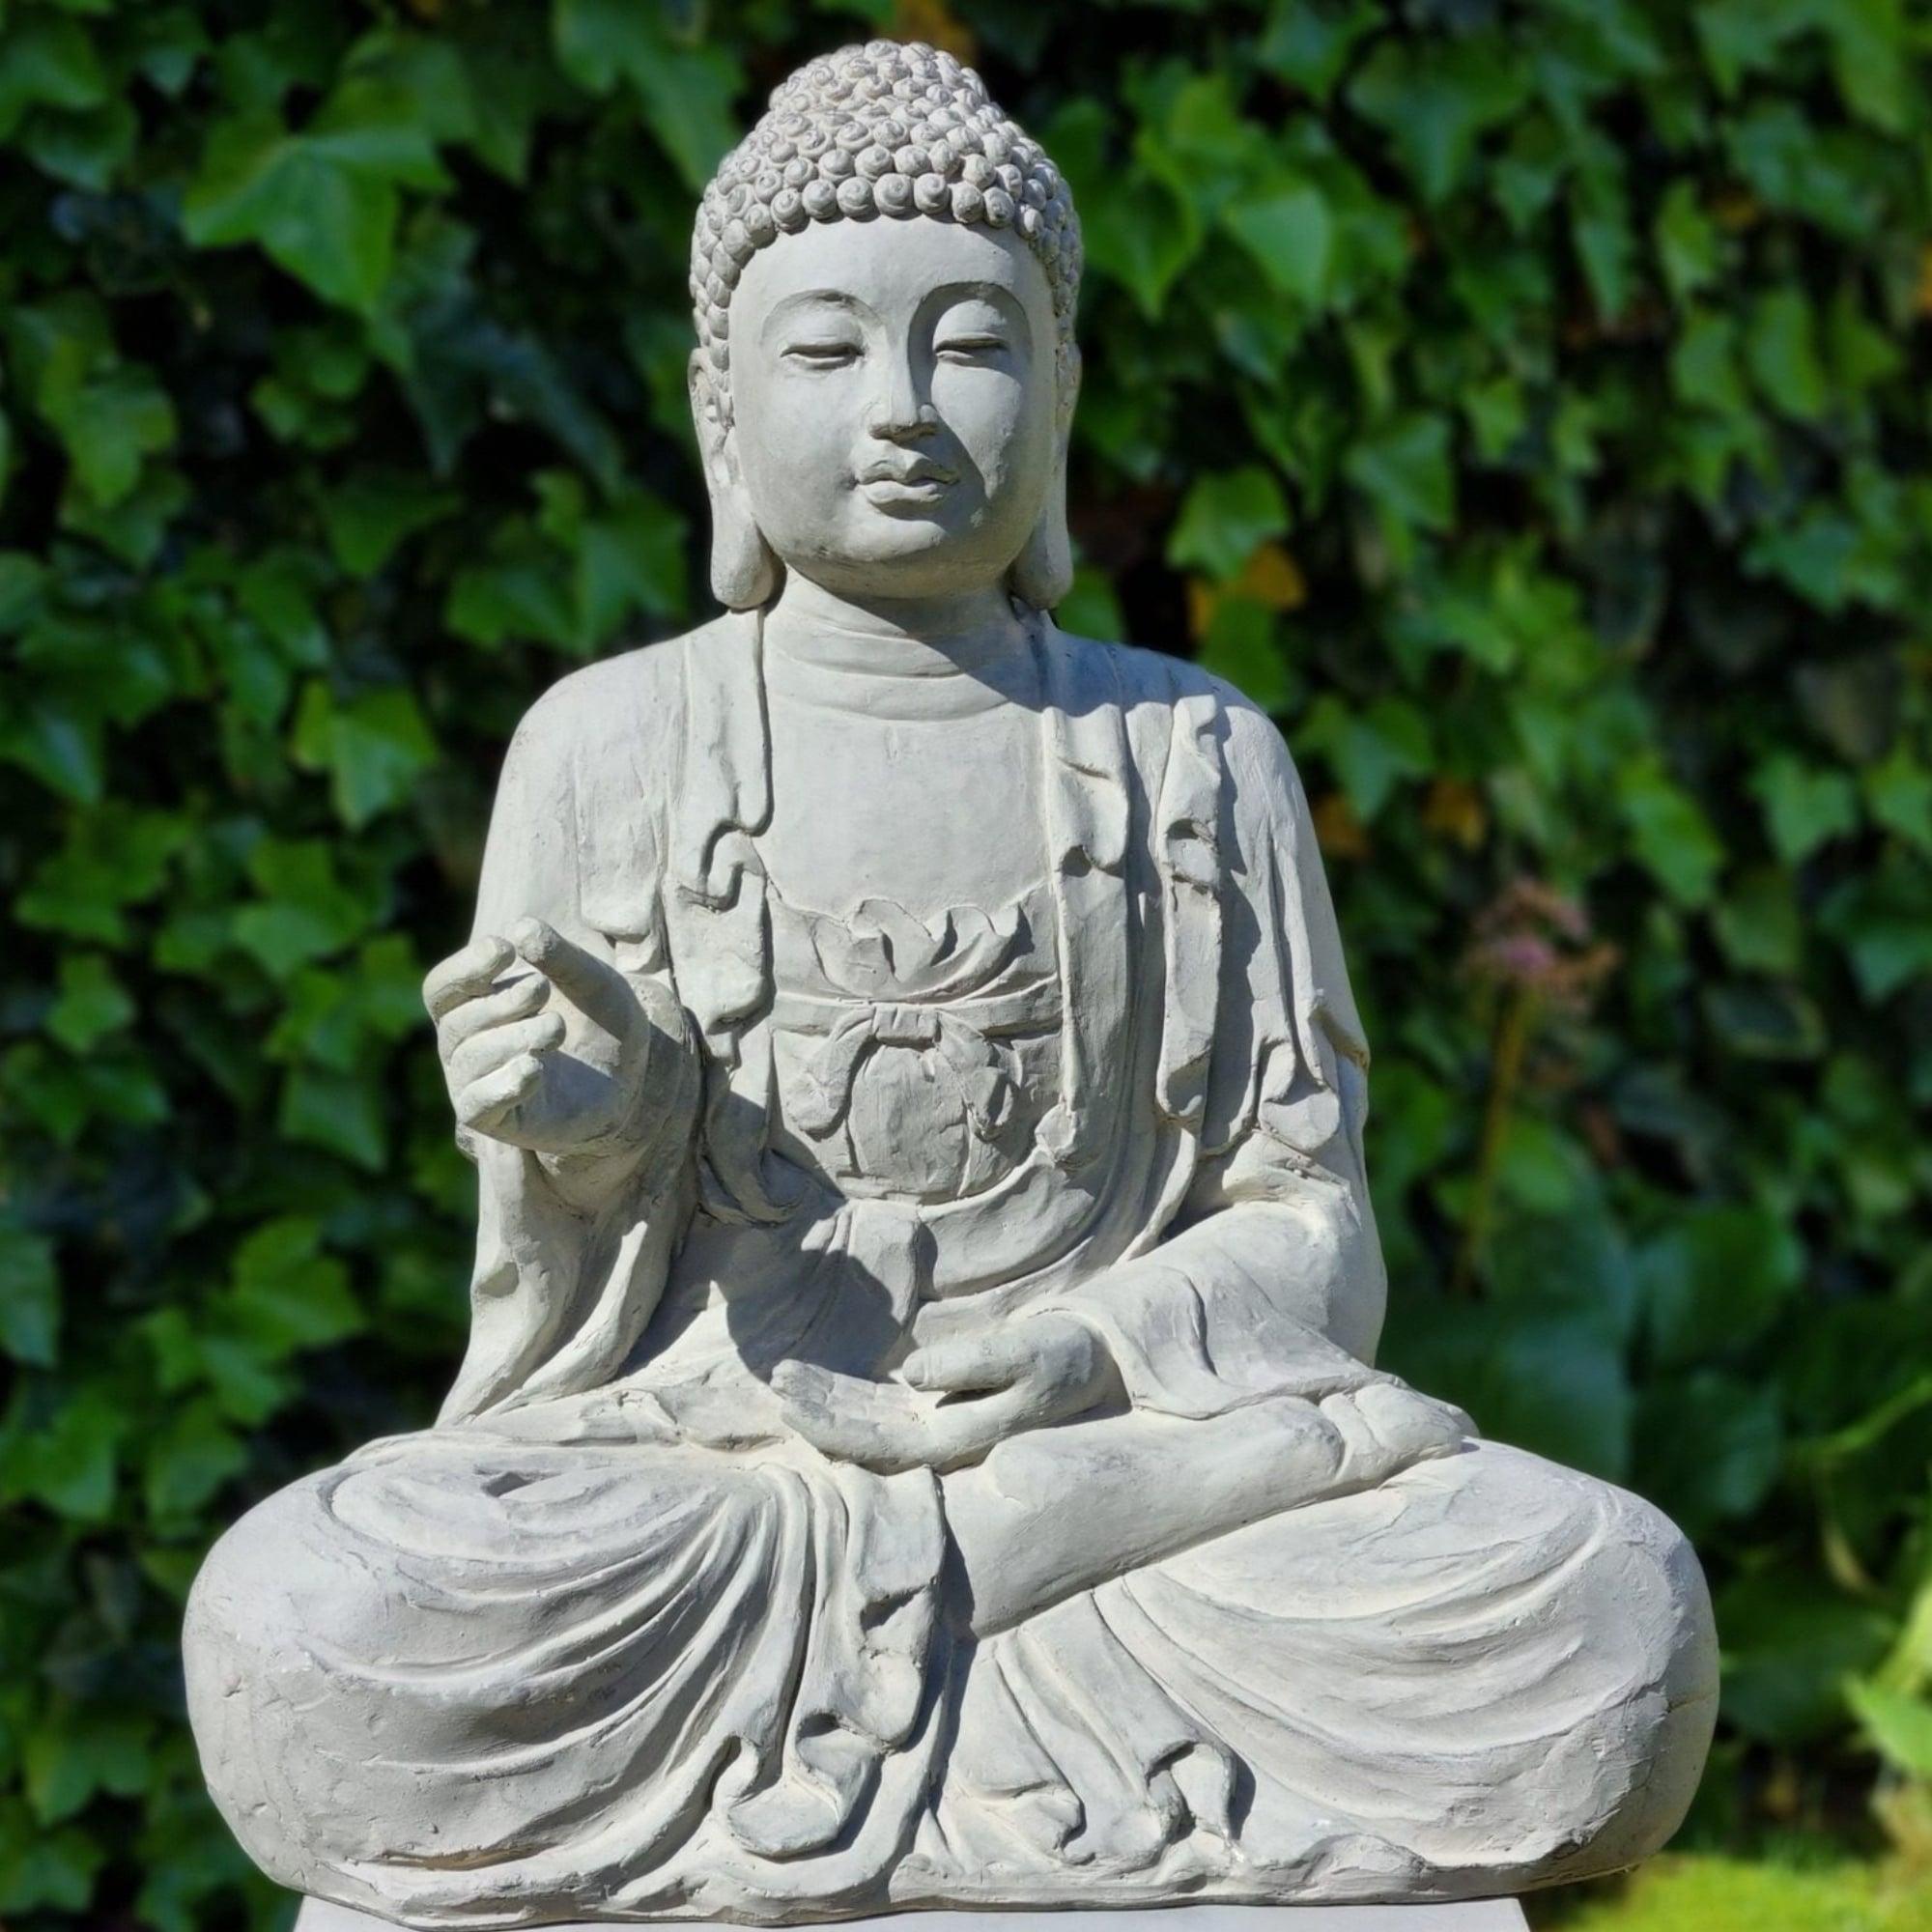 Buddha Garden Statues for Outdoors 63cm - Large Dark Gray Garden Statue